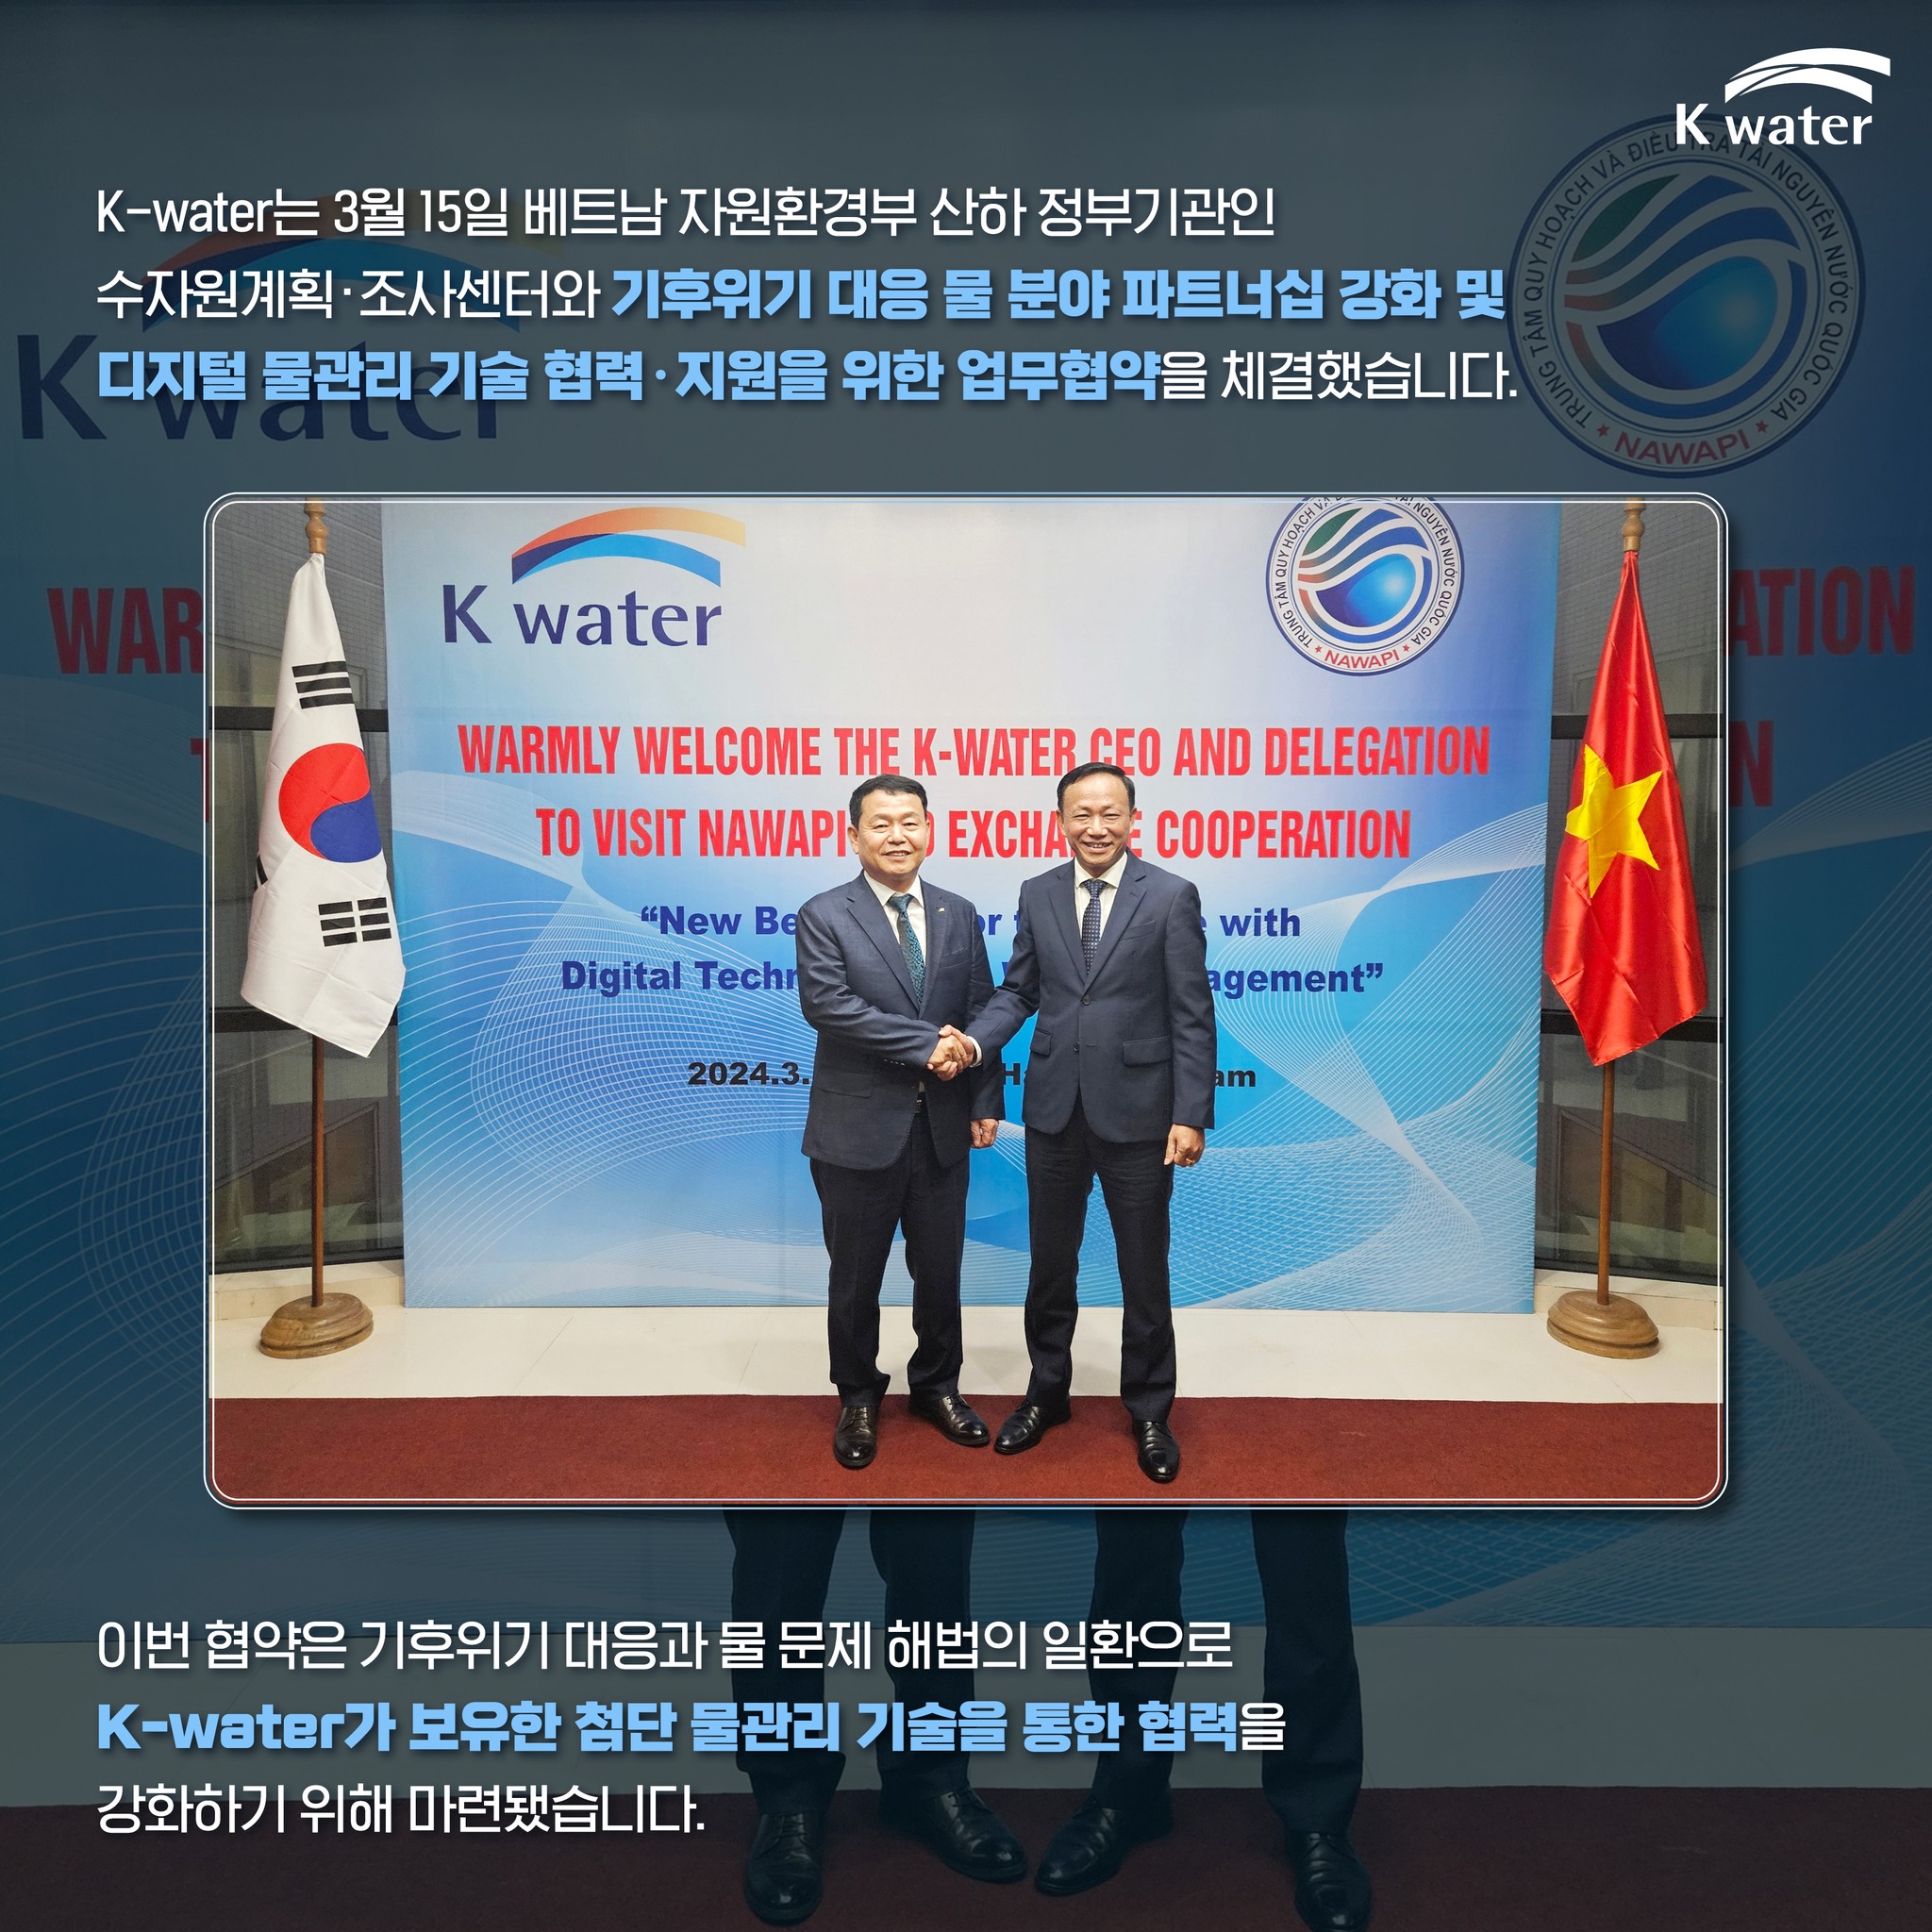 K-water는 3월 15일 베트남 자원환경부 산하 정부기관인 수자원계획ㆍ조사센터와 기후위기 대응 물 분야 파트너십 강화 및 디지털 물관리 기술 협력ㆍ지원을 위한 업무협약을 체결했습니다. 이번 협약은 기후위기 대응과 물 문제 해법의 일환으로 K-water가 보유한 첨단 물관히 기술을 통합 협력을 강화하기 위해 마련됐습니다.